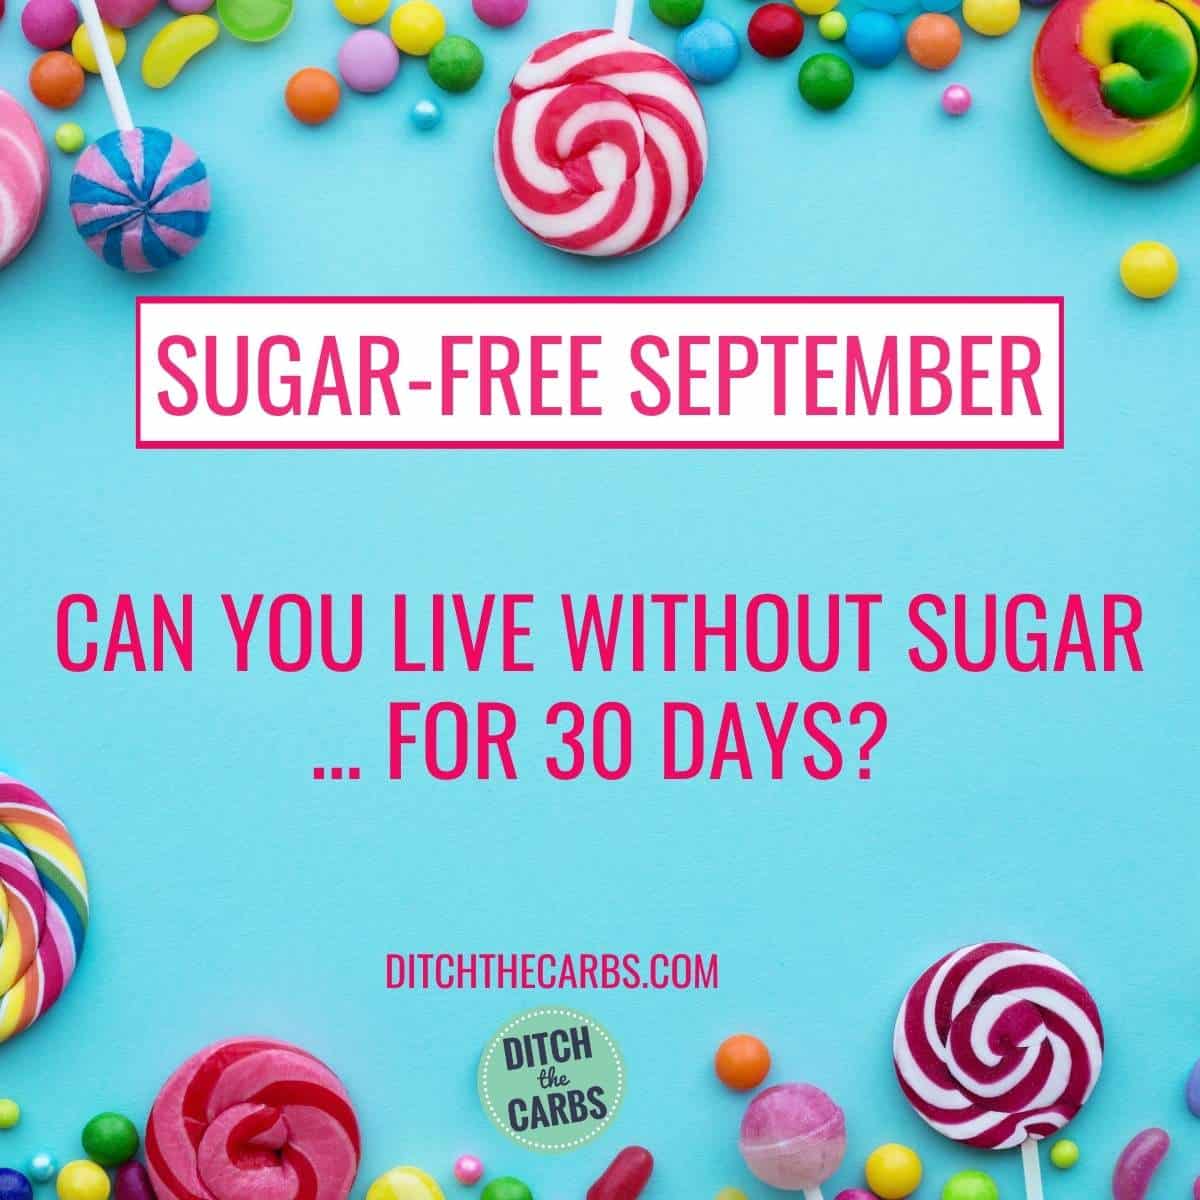 Sugar-Free September 2021 — FREE 30-DAY CHALLENGE